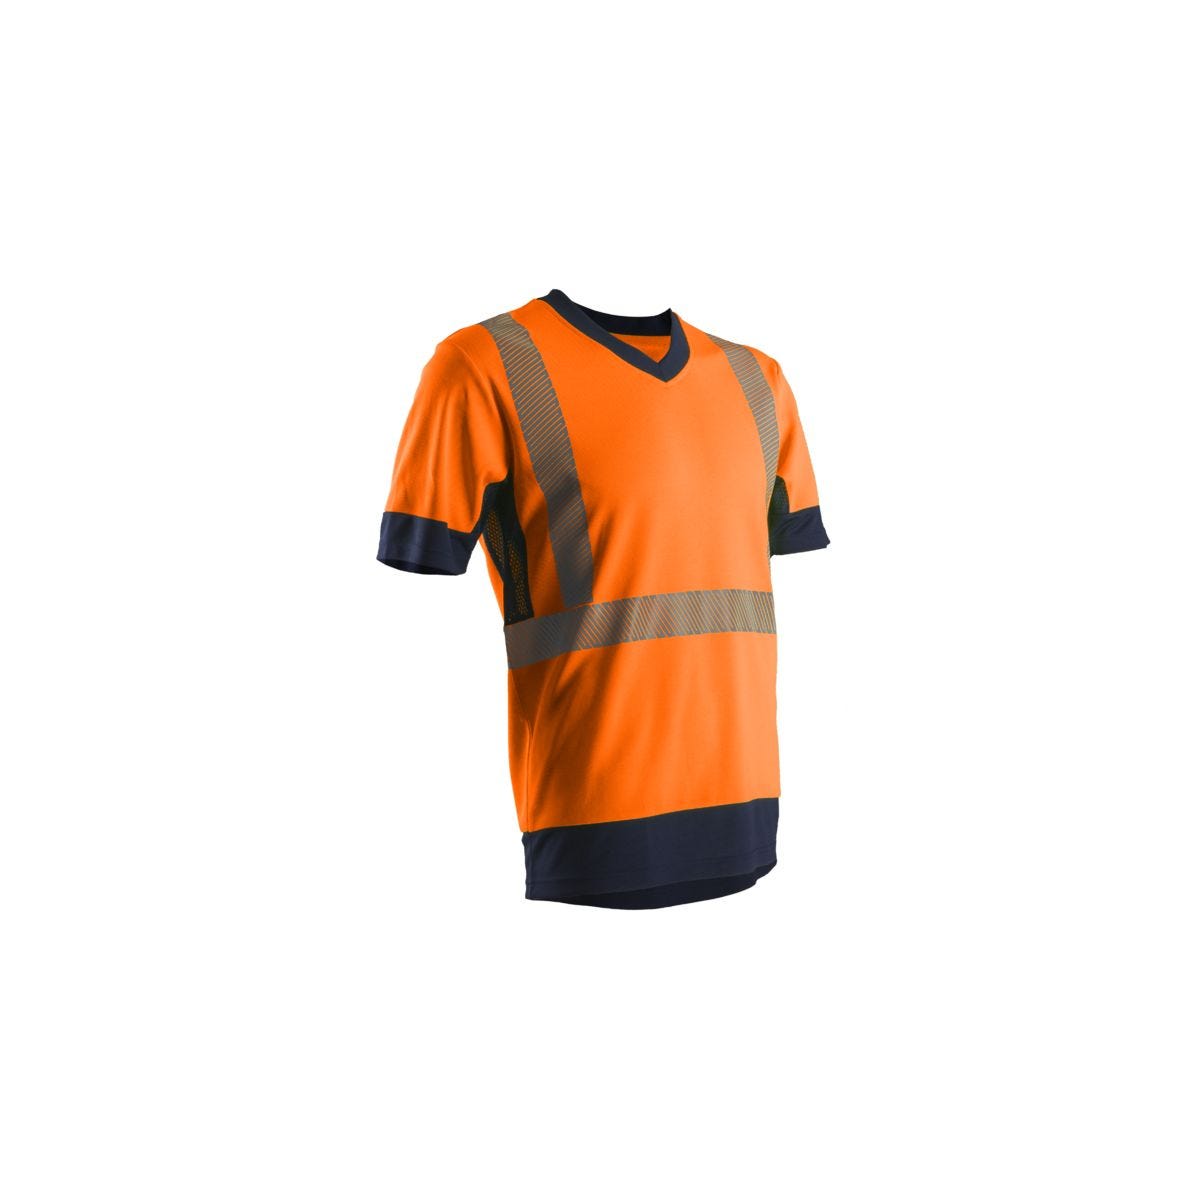 KOMO T-shirt MC, orange HV/marine, 55%CO/45%PES, 150g/m² - COVERGUARD - Taille 3XL 0